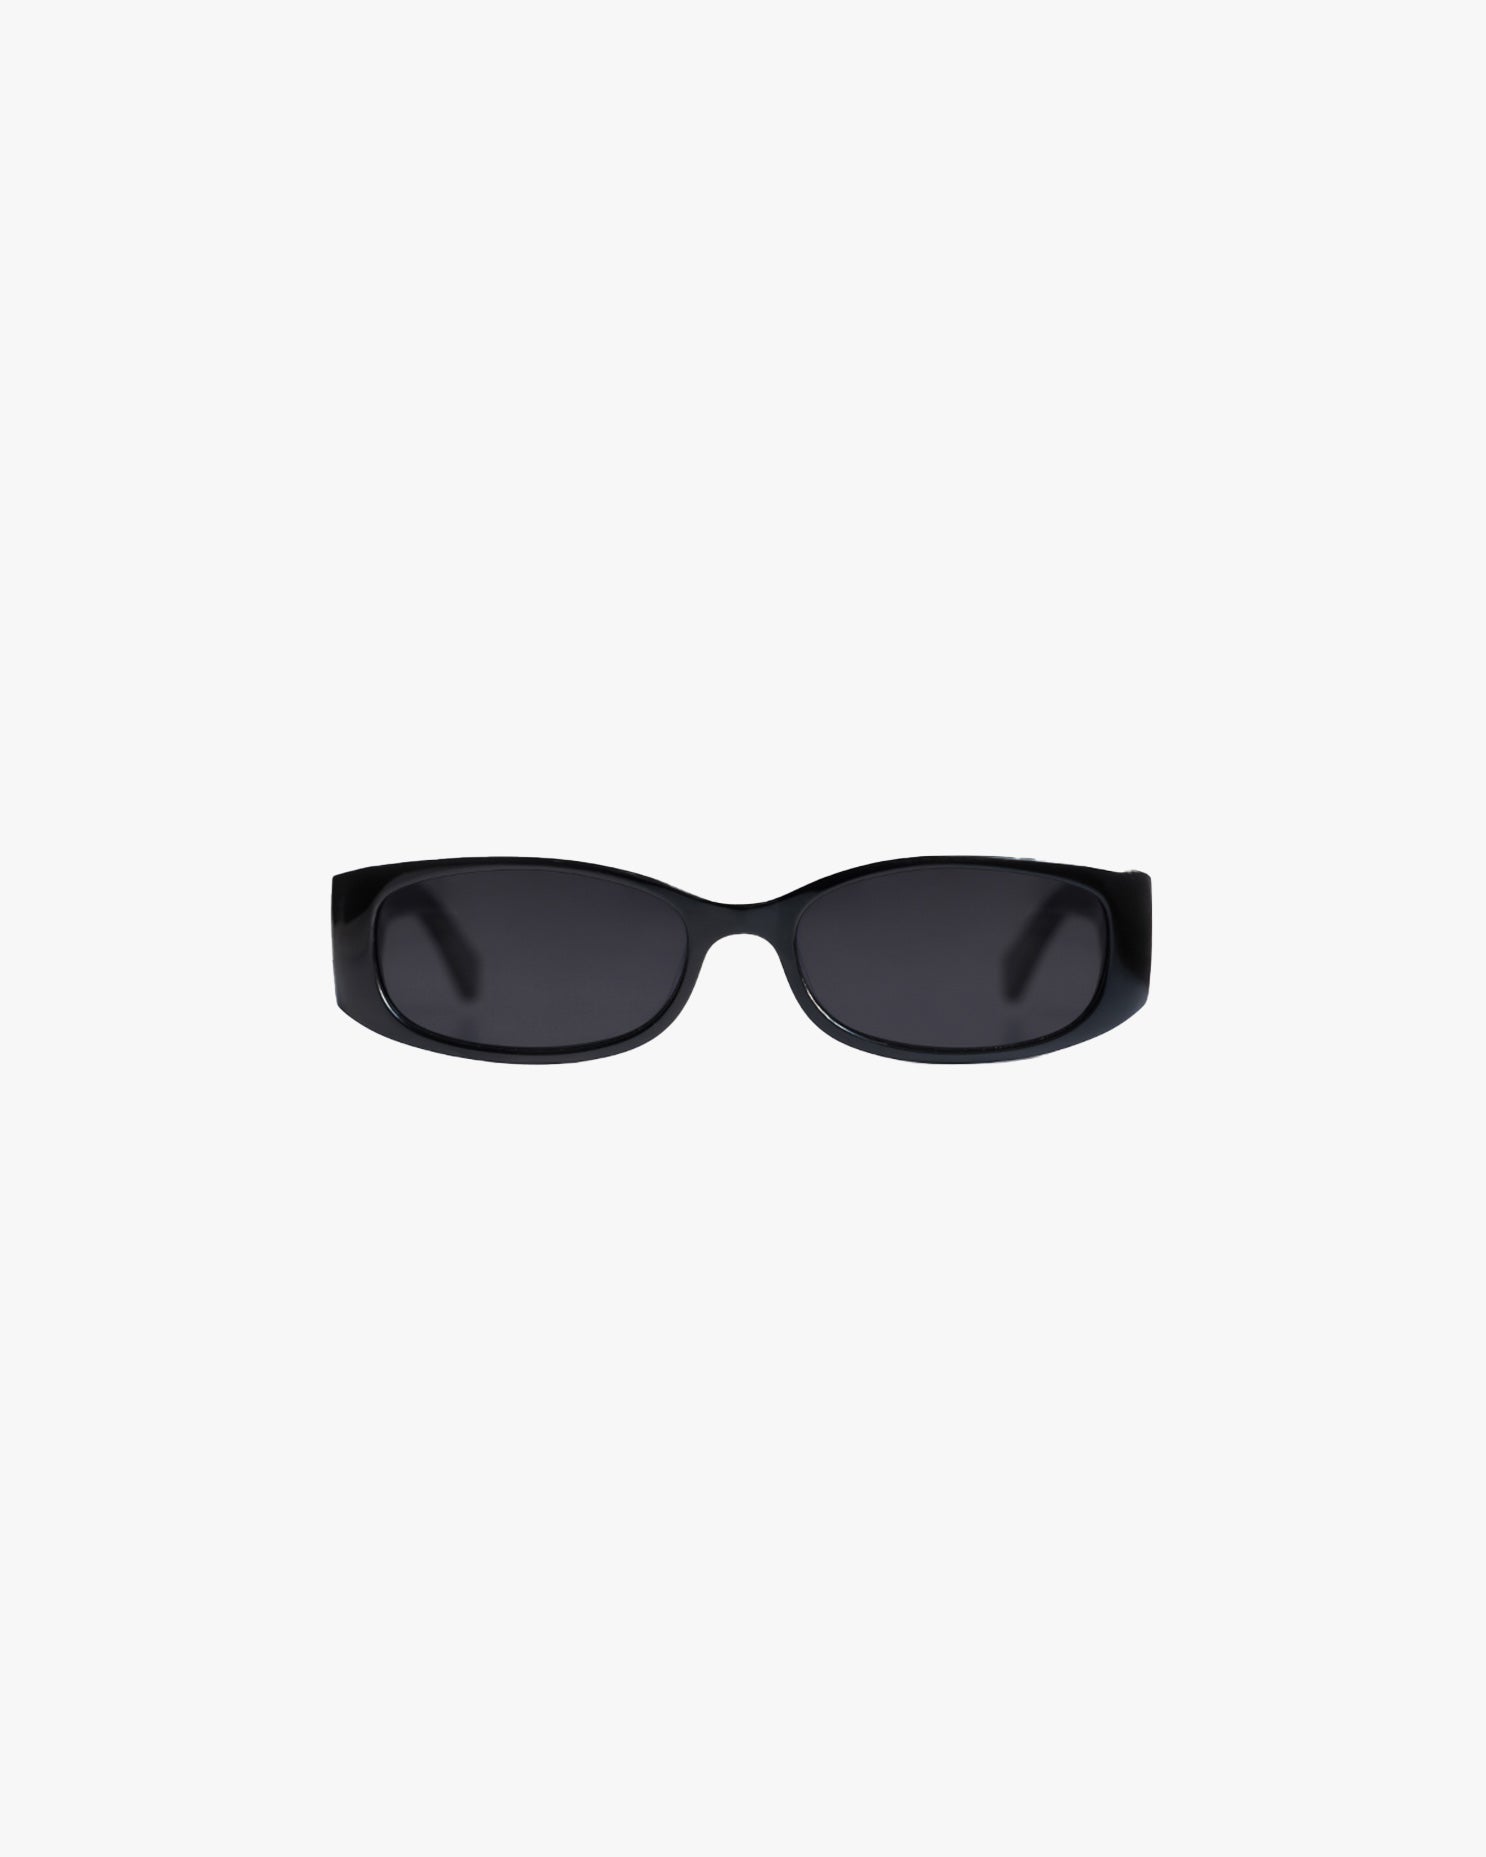 Romy Sunglasses in Black